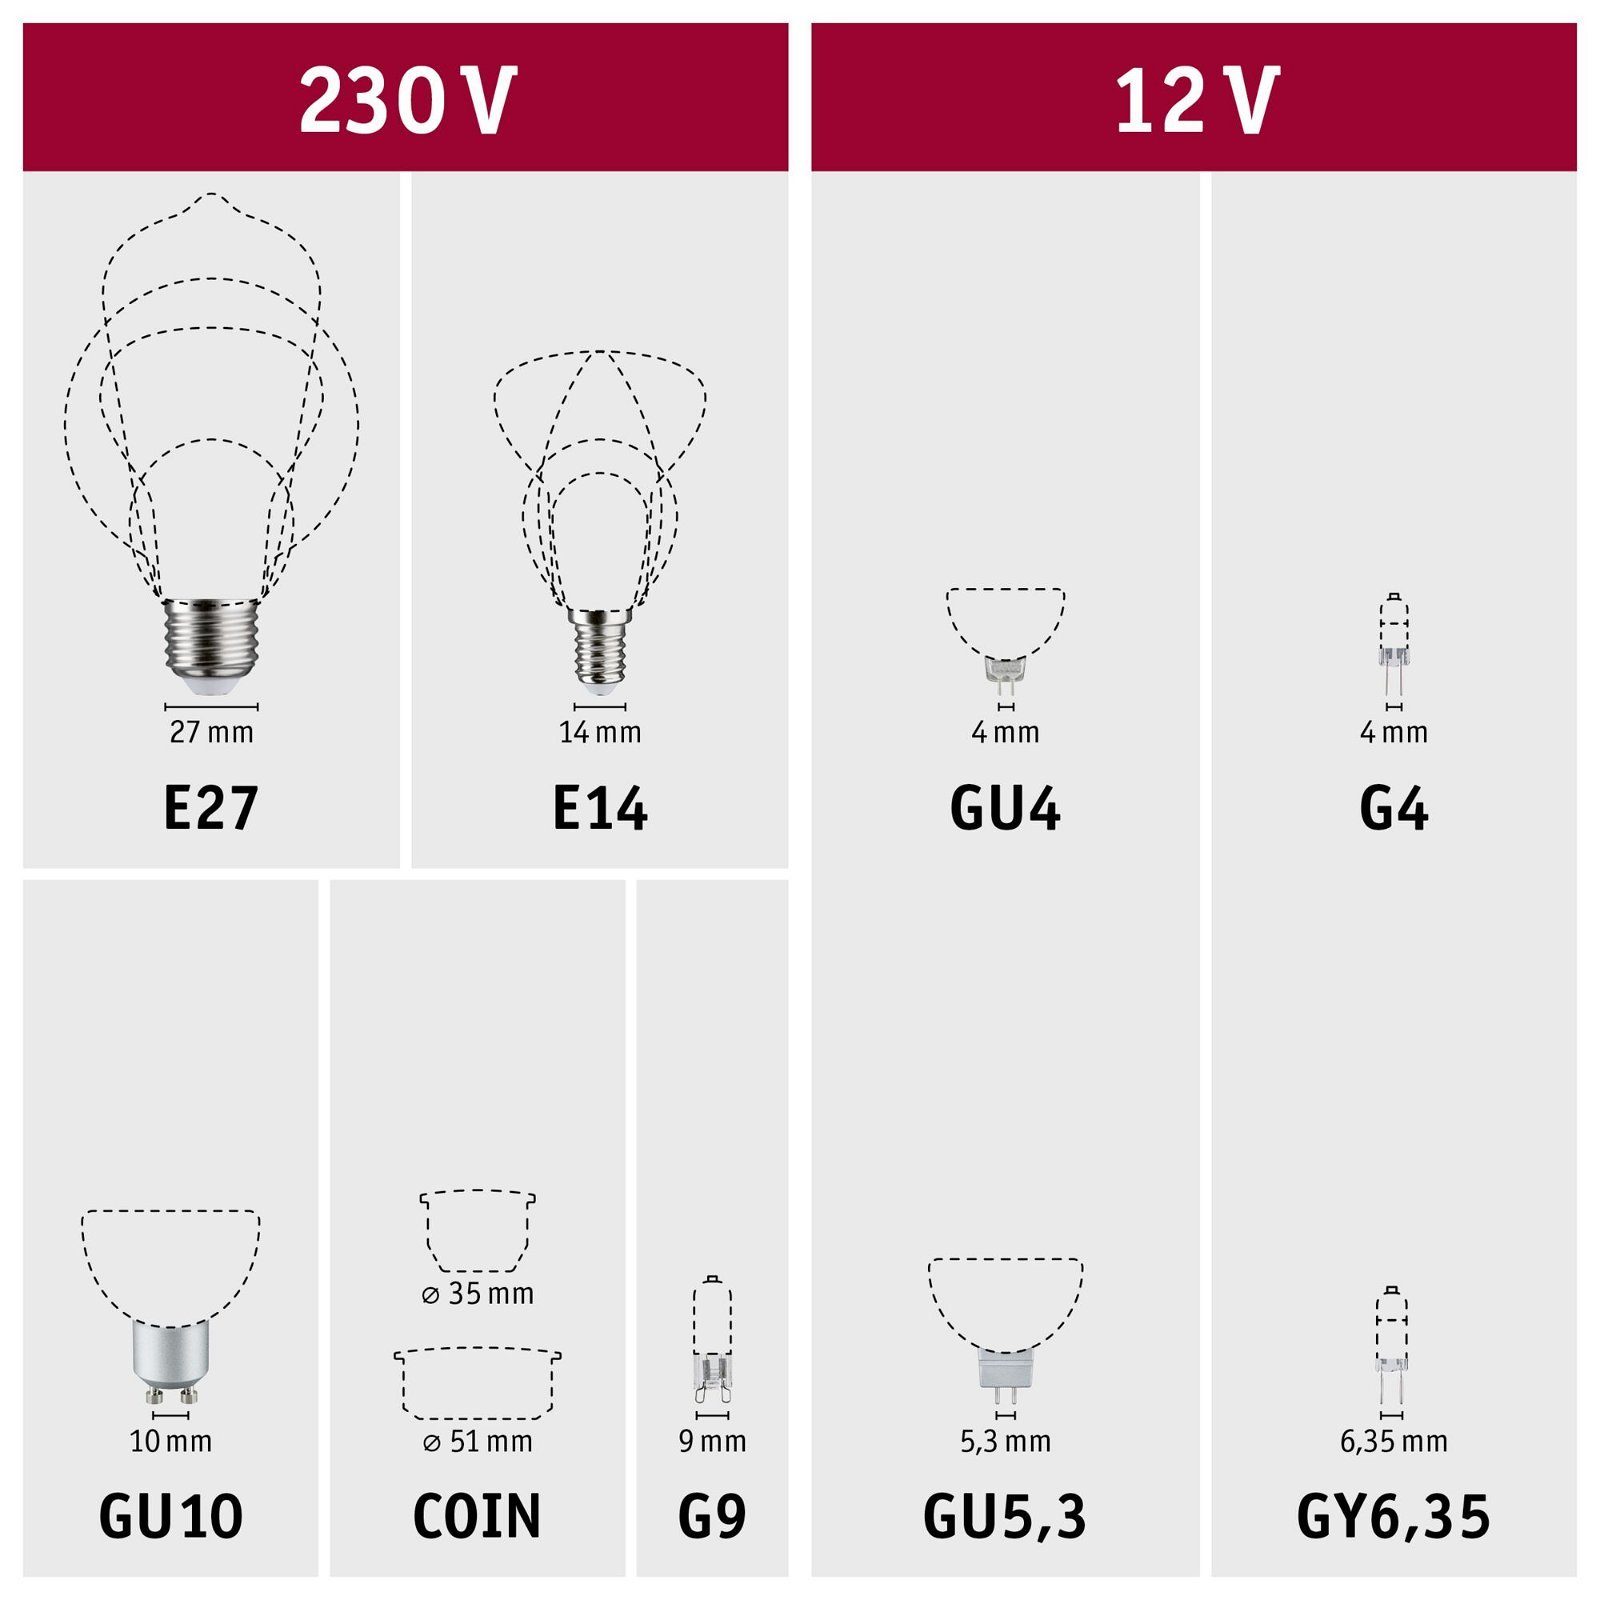 Paulmann LED-Leuchtmittel G95 Fantastic 1 Colors 230V 2700K dimmbar, 2.700K St., Warmweiß 470lm